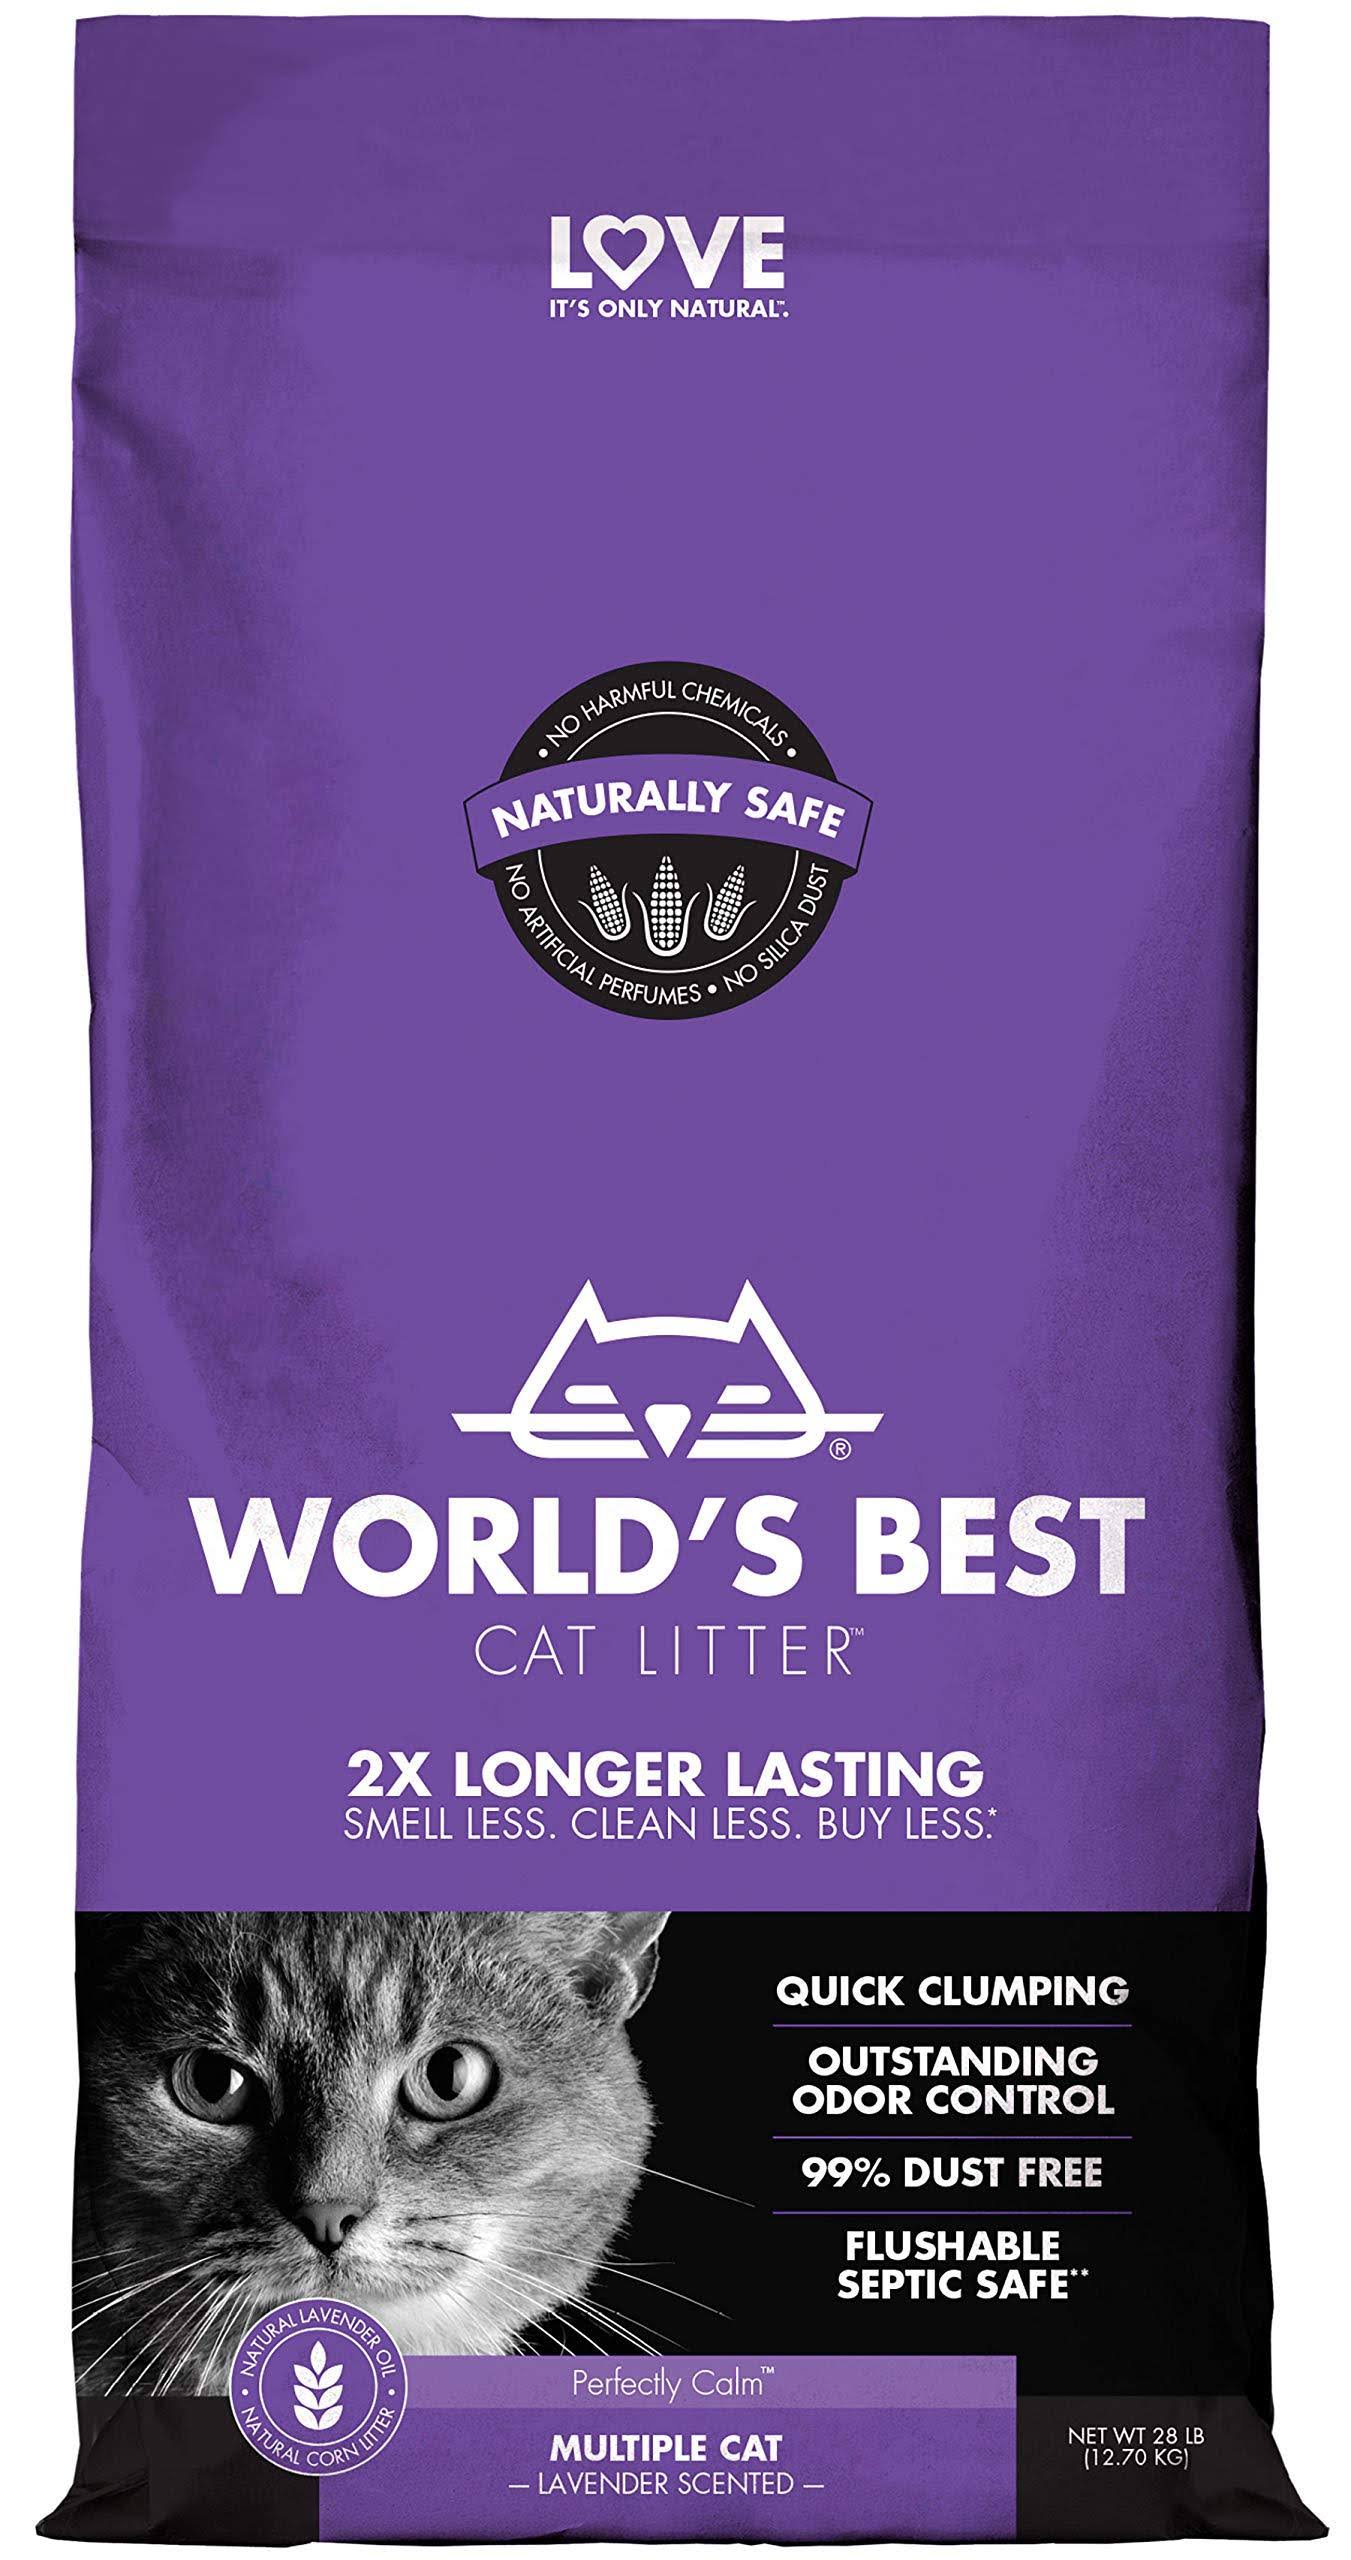 World's Best Cat Litter Quick Cat Clumping Formula - Lavender Scented, 28lb